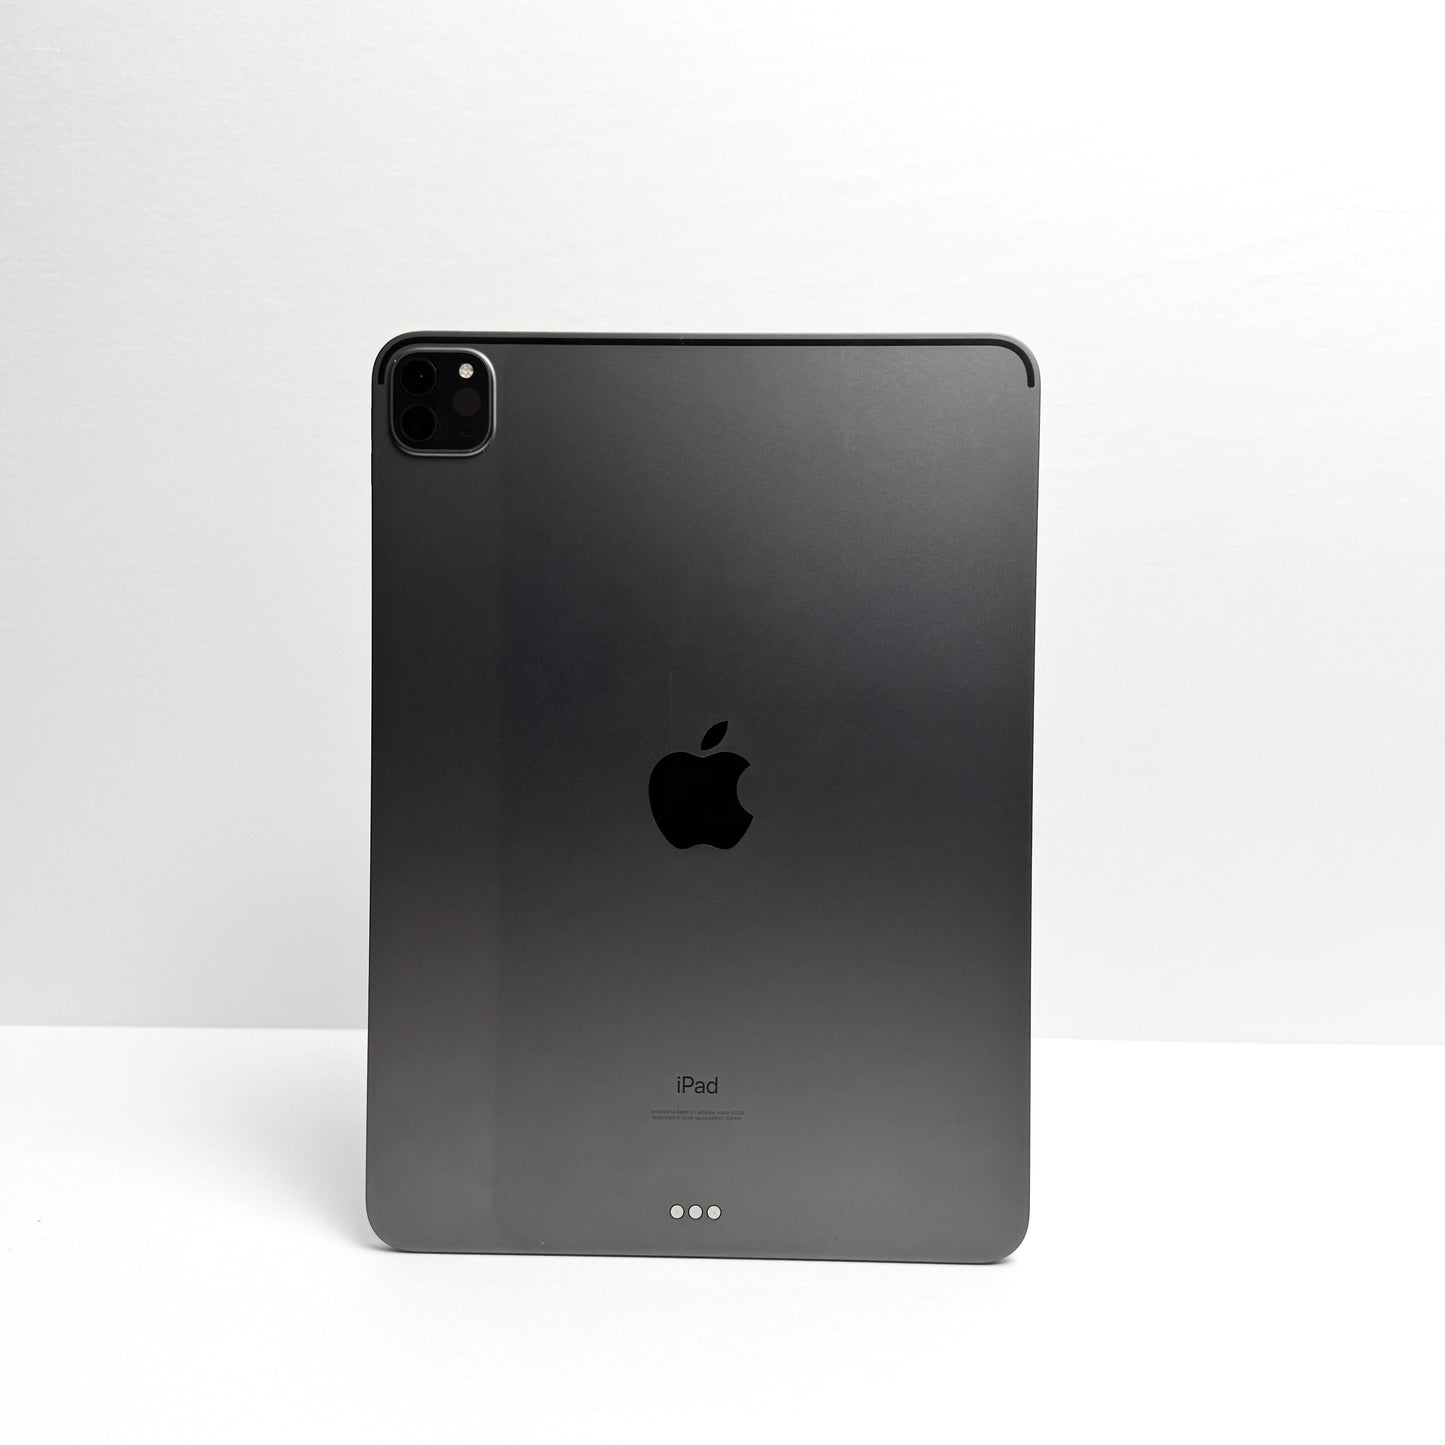 Apple iPad Pro 2nd Generation 128GB Wi-Fi - 11 inch 2020 - Space Grey